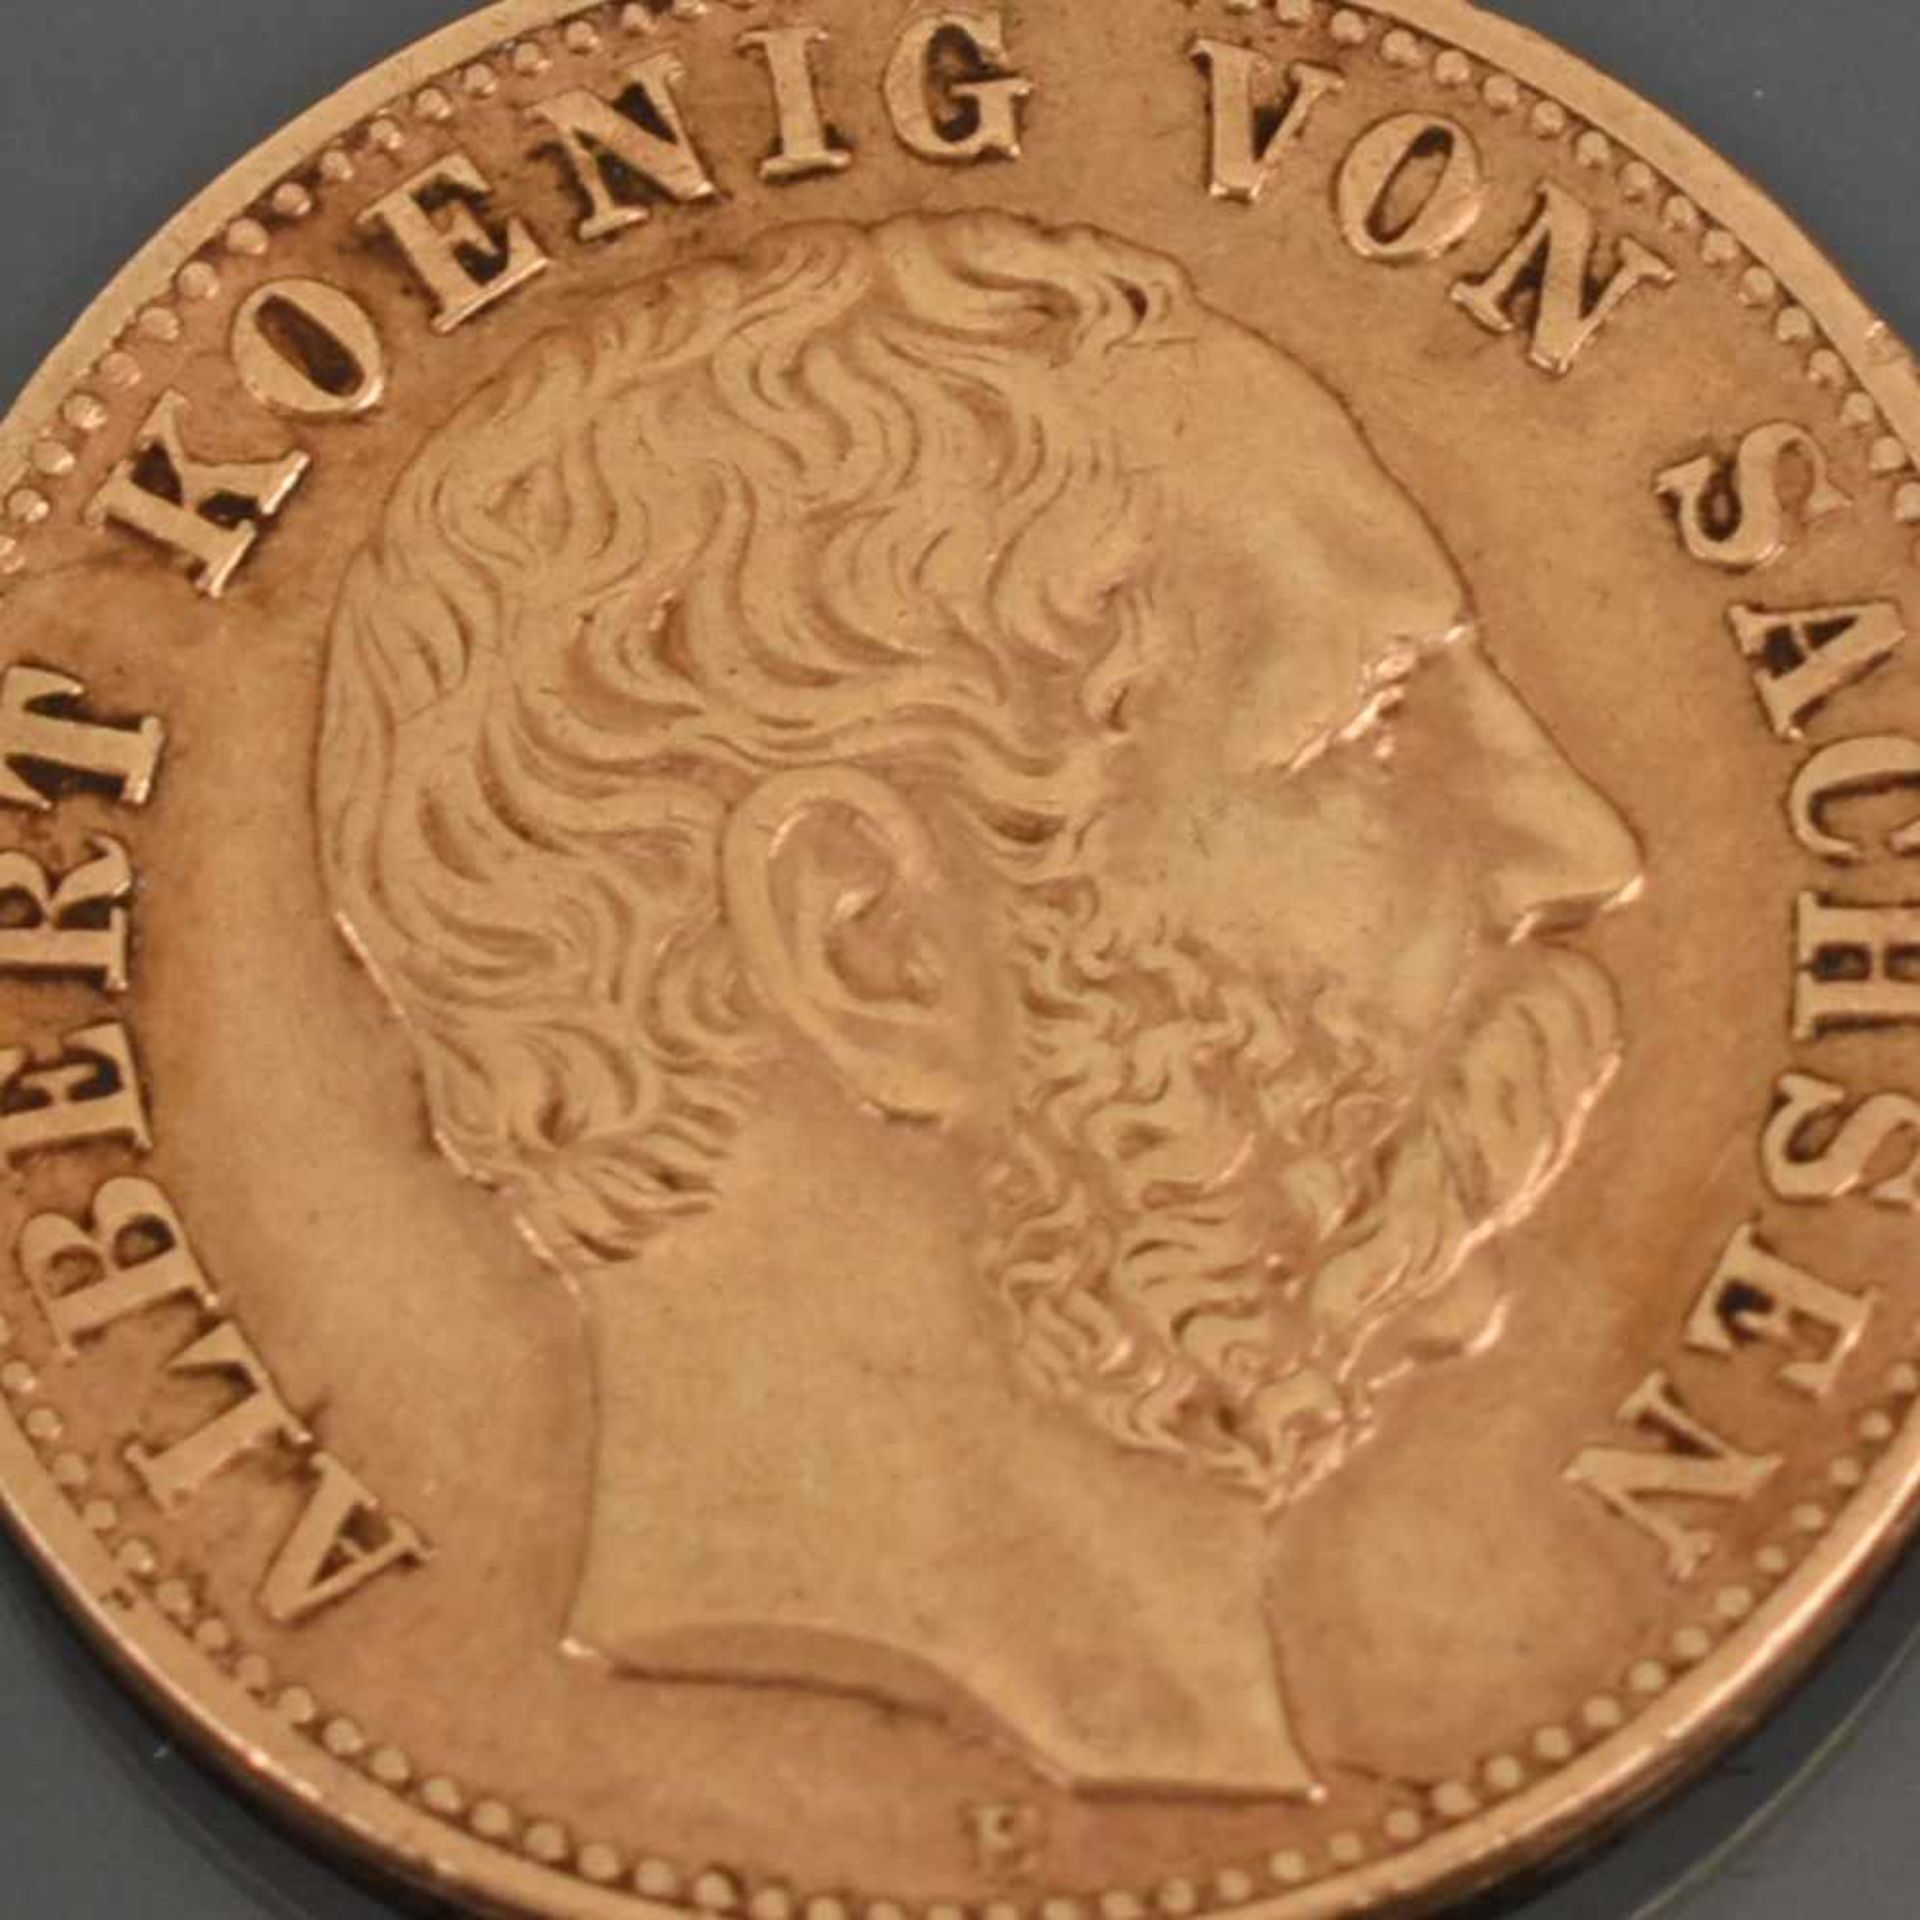 Goldmünze Kaiserreich - Sachsen 1891 10 Mark in Gold, 900/1000, 3,98 g, D ca. 19,5 mm, av. Albert